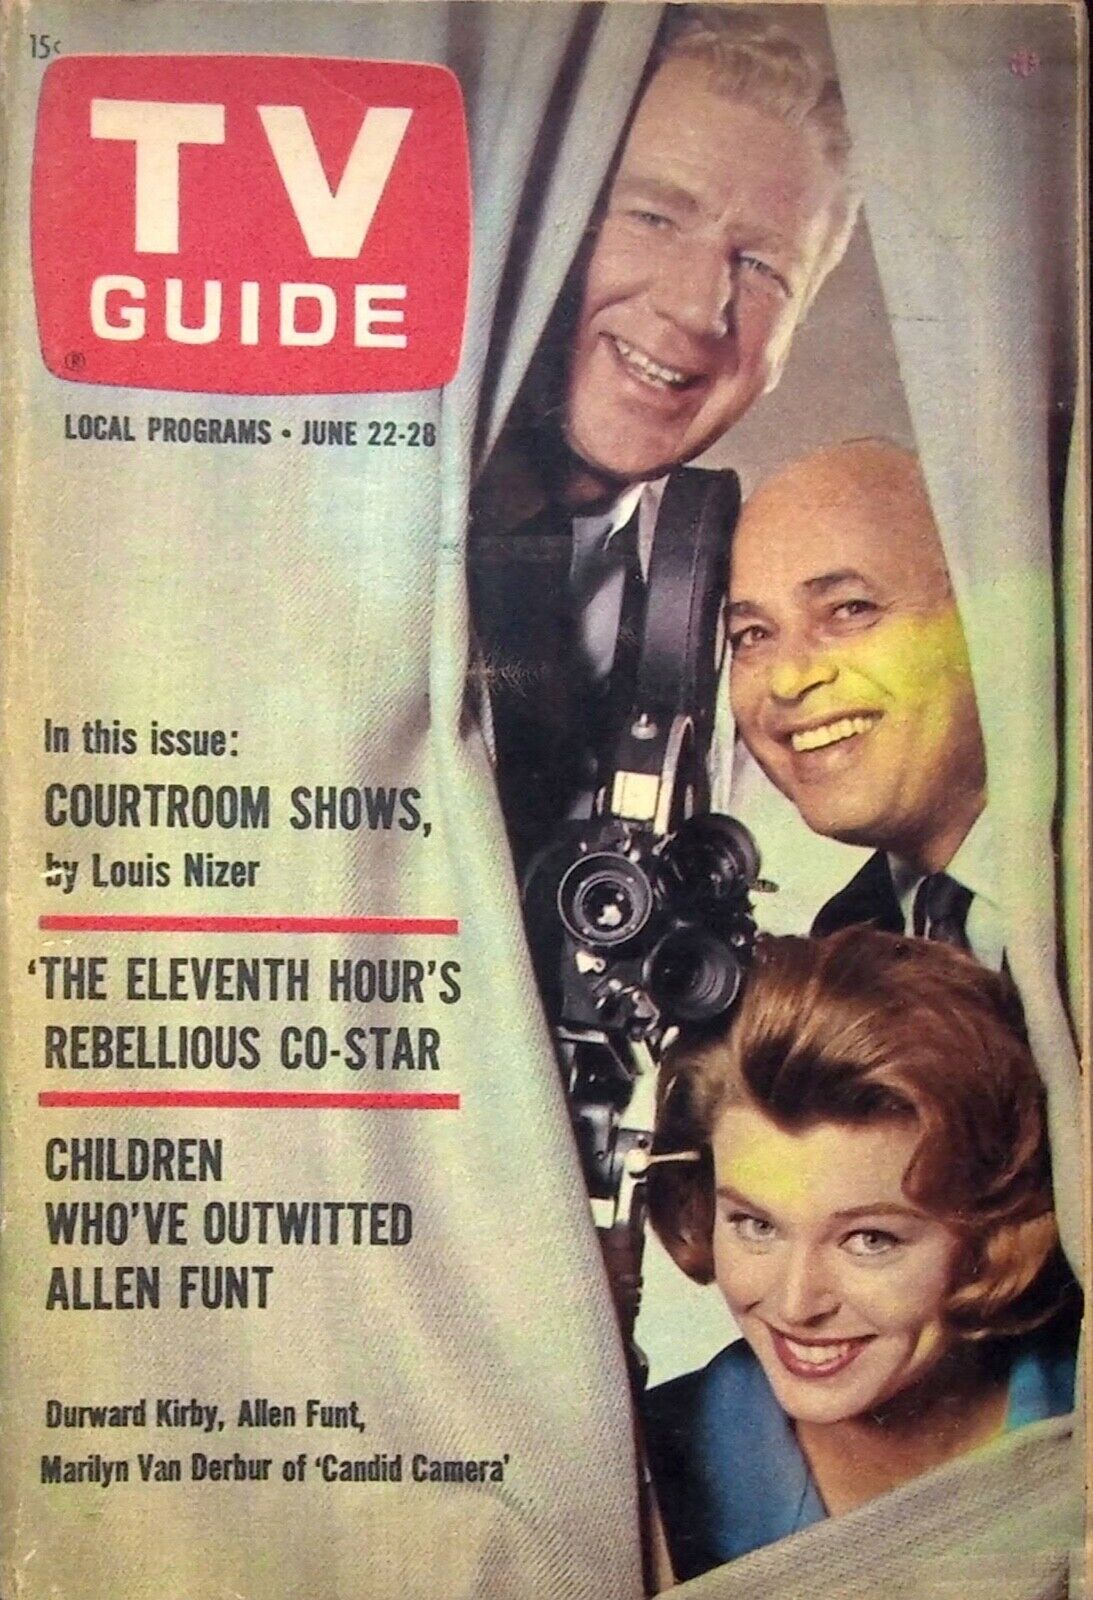 VINTAGE TV GUIDE MAGAZINE, VOL. 11, NO. 25 JUNE 22, 1963 ISSUE #534